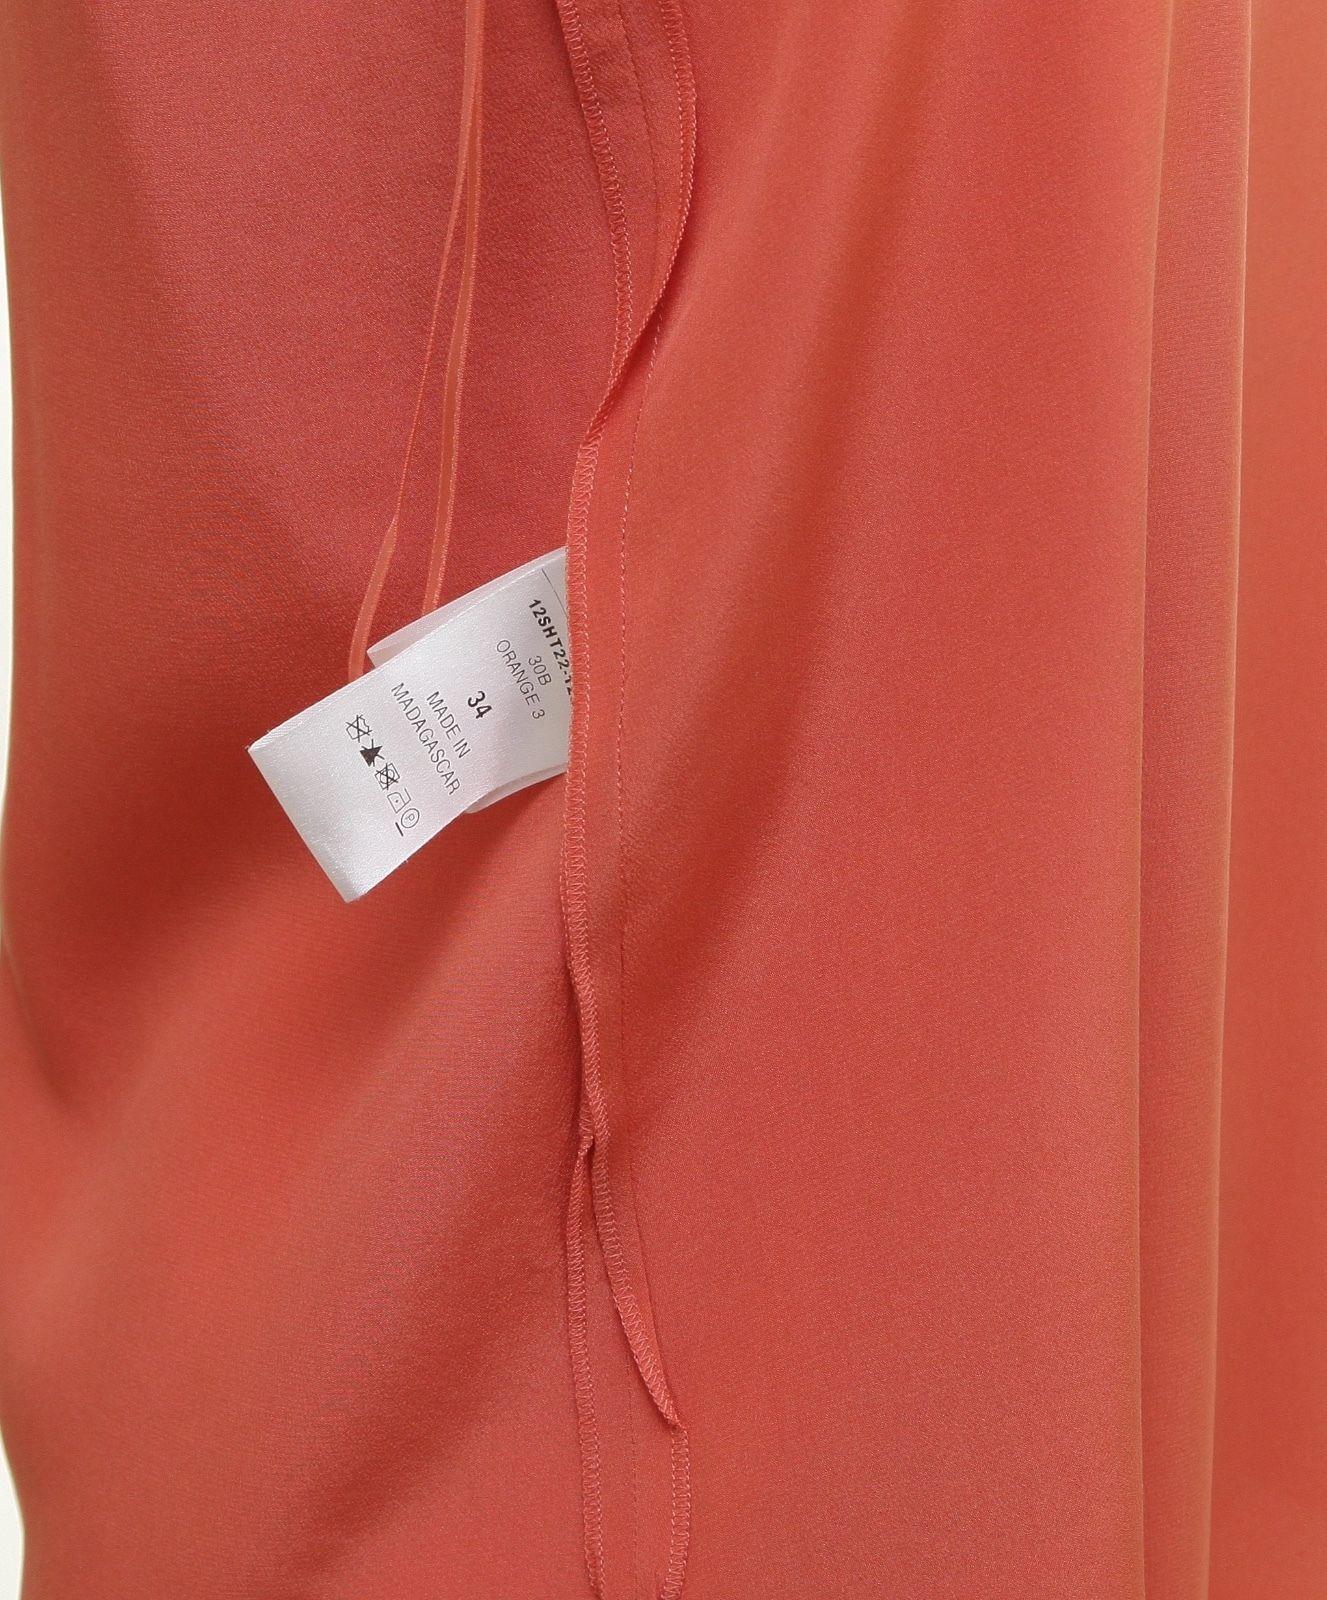 Chloe Orange Silk Sleeveless Blouse Top Dress Shirt 34 12S For Sale 2